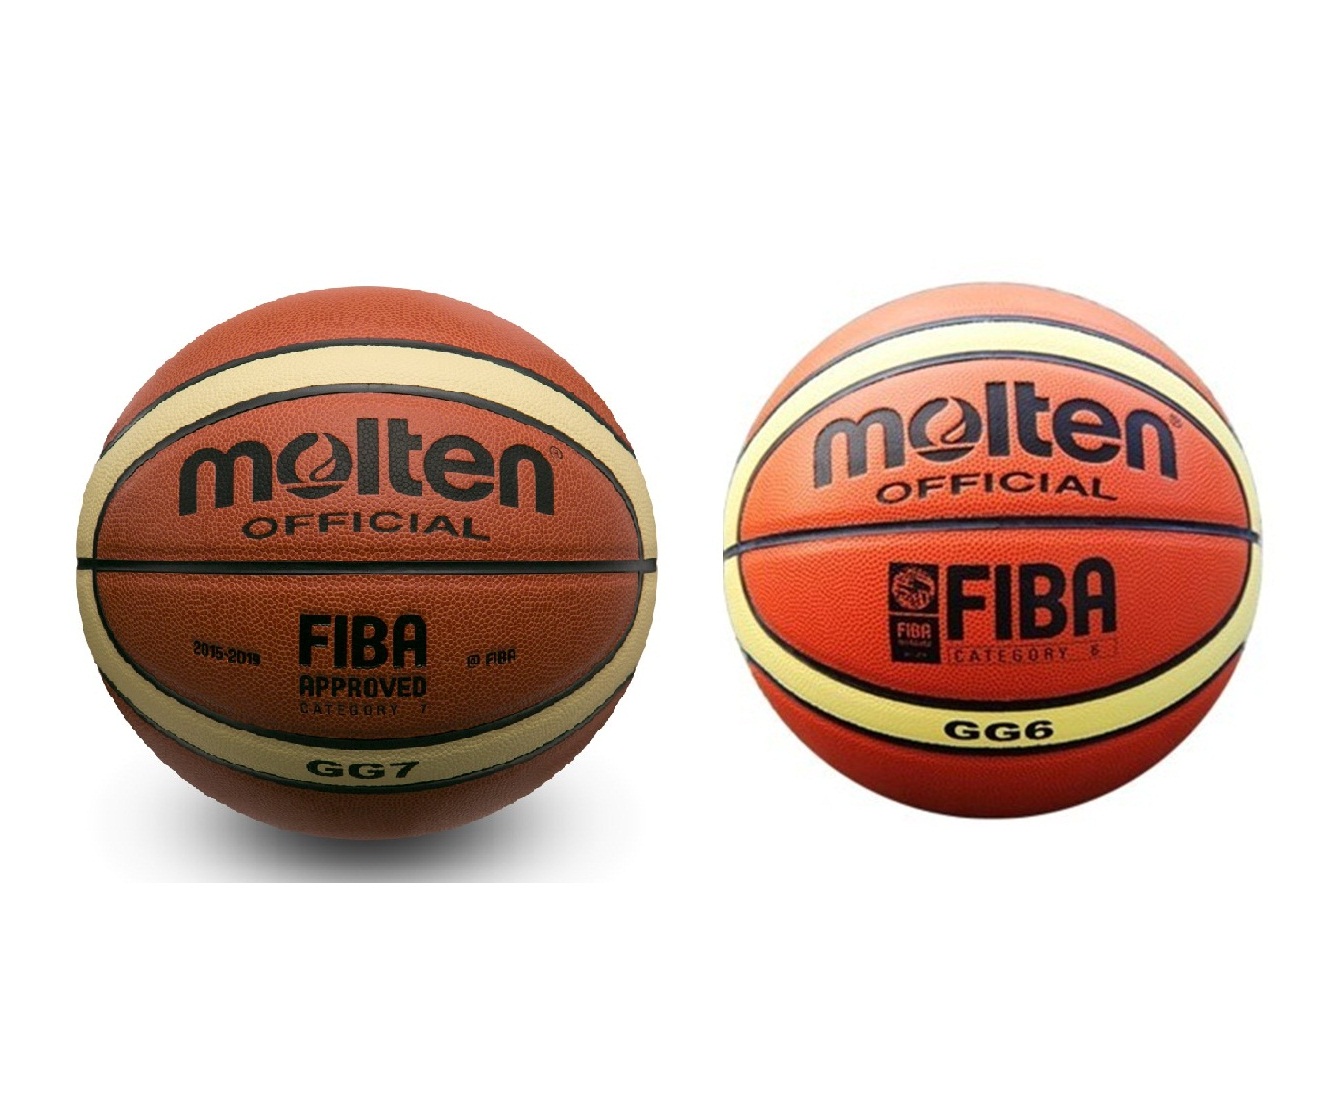 Balon de Baloncesto o Basquetbol Fire Sports de Piel B2000